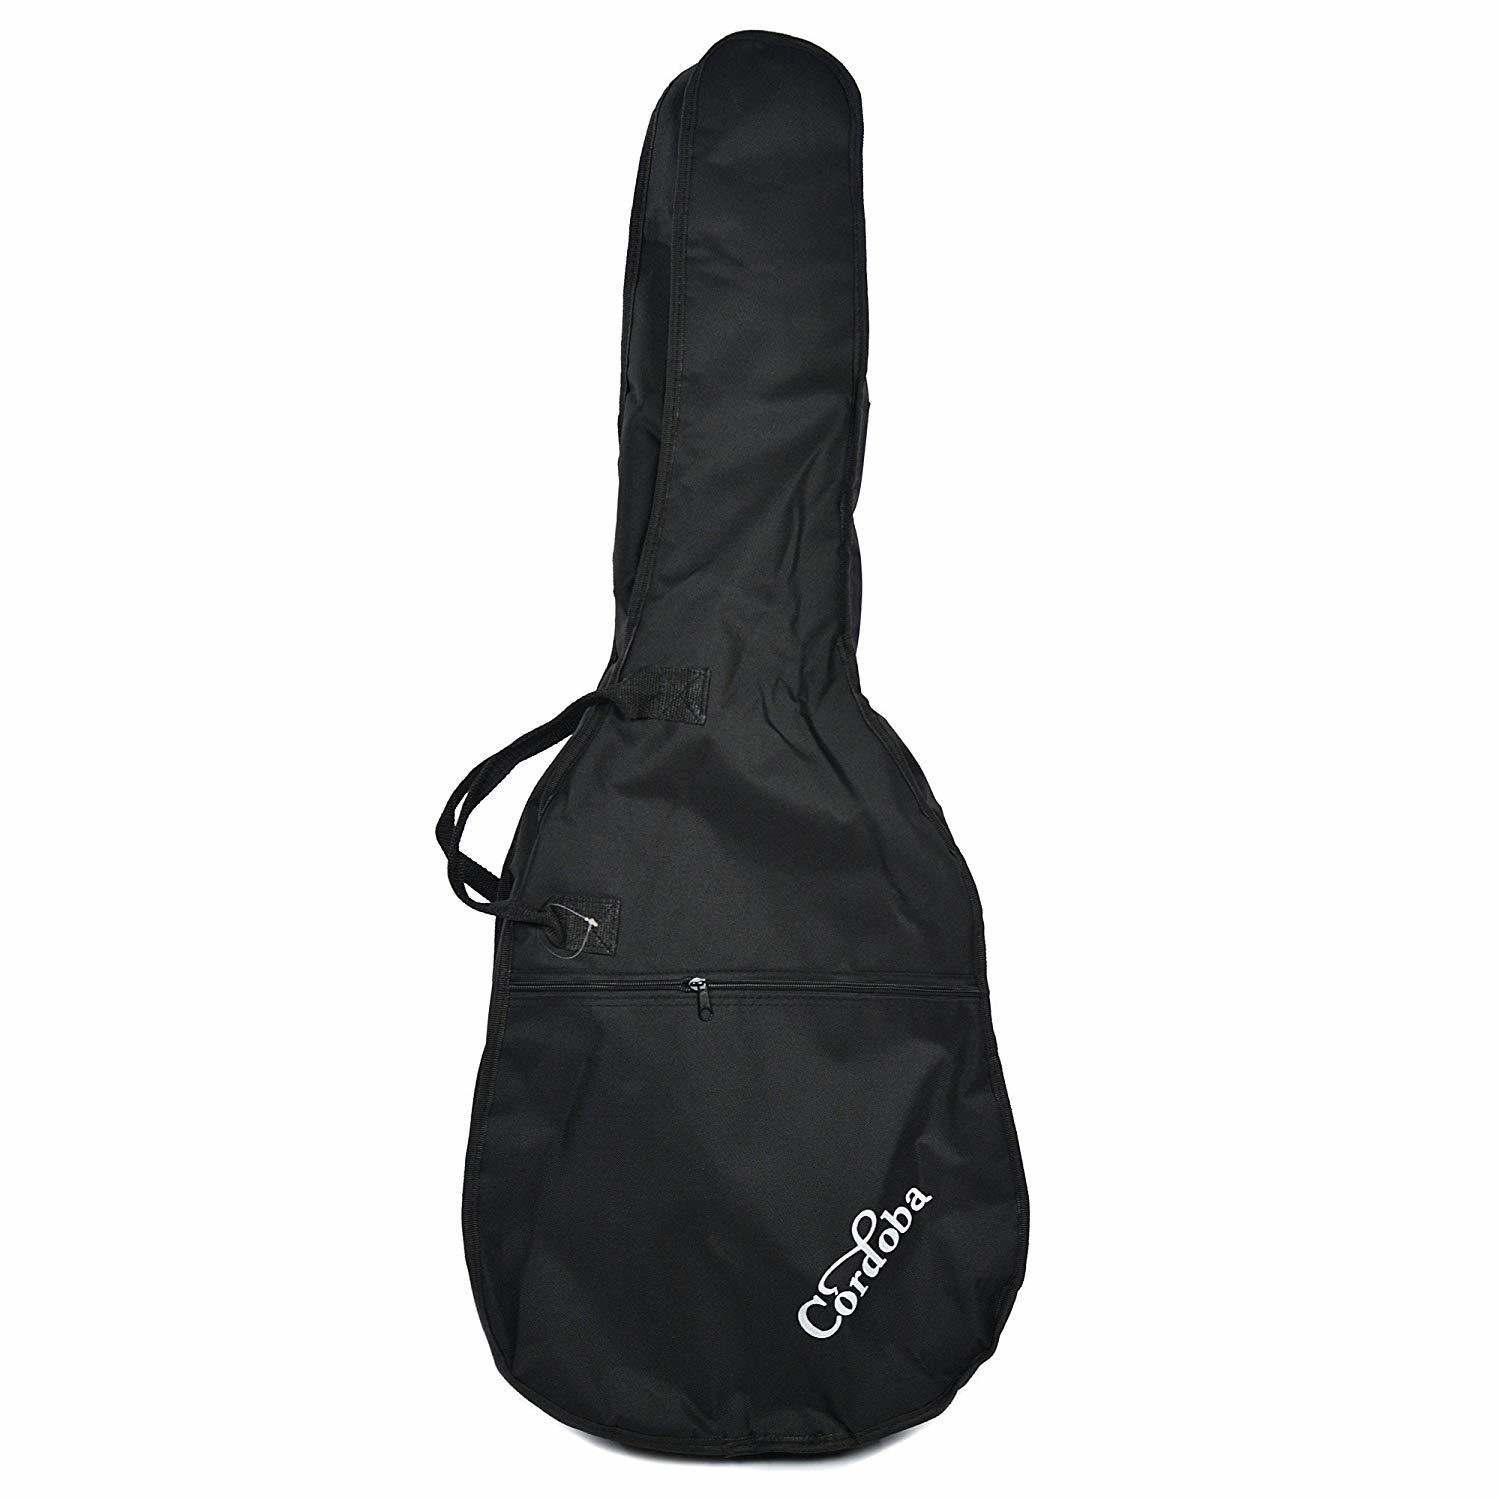 Cordoba Standard Gig Bag - Non-Padded - for Full size classical guitars